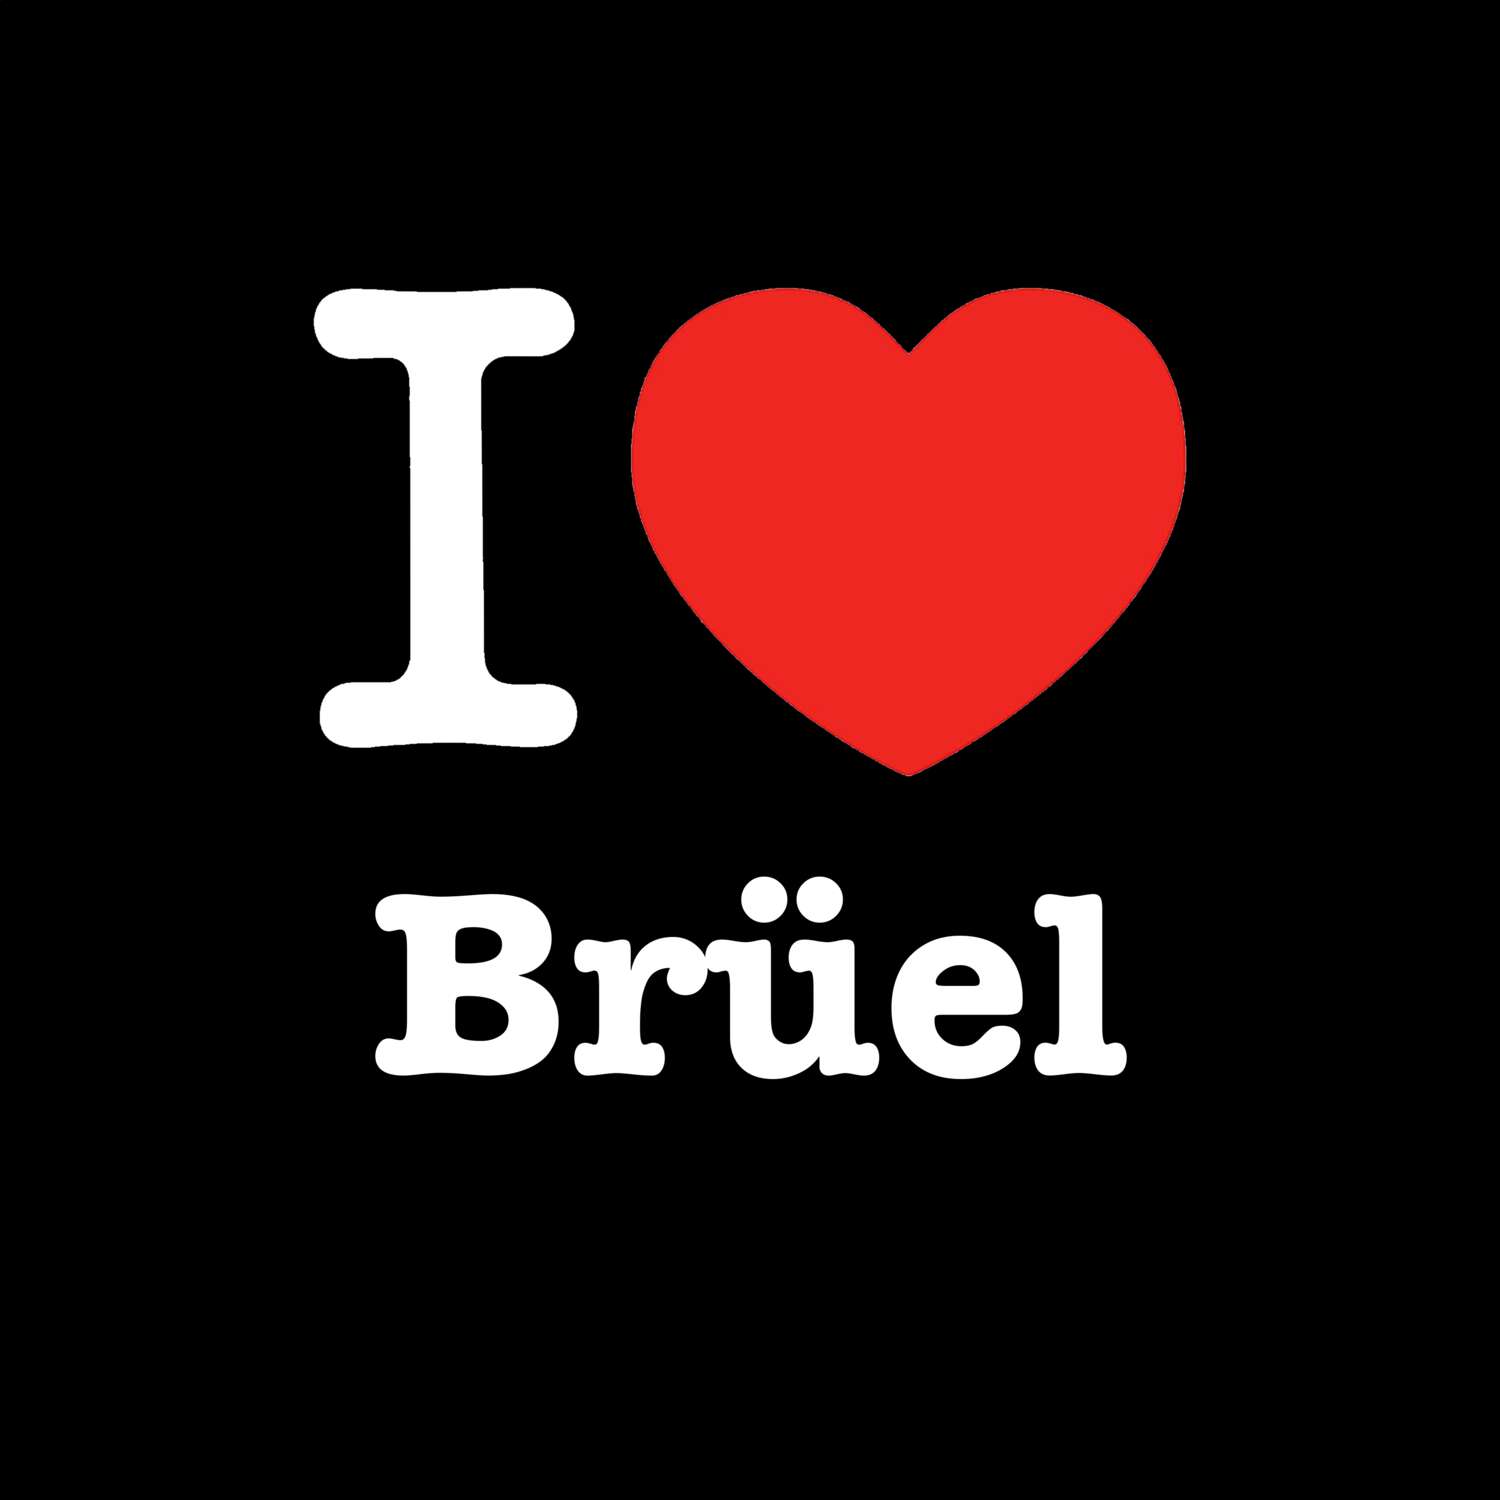 Brüel T-Shirt »I love«